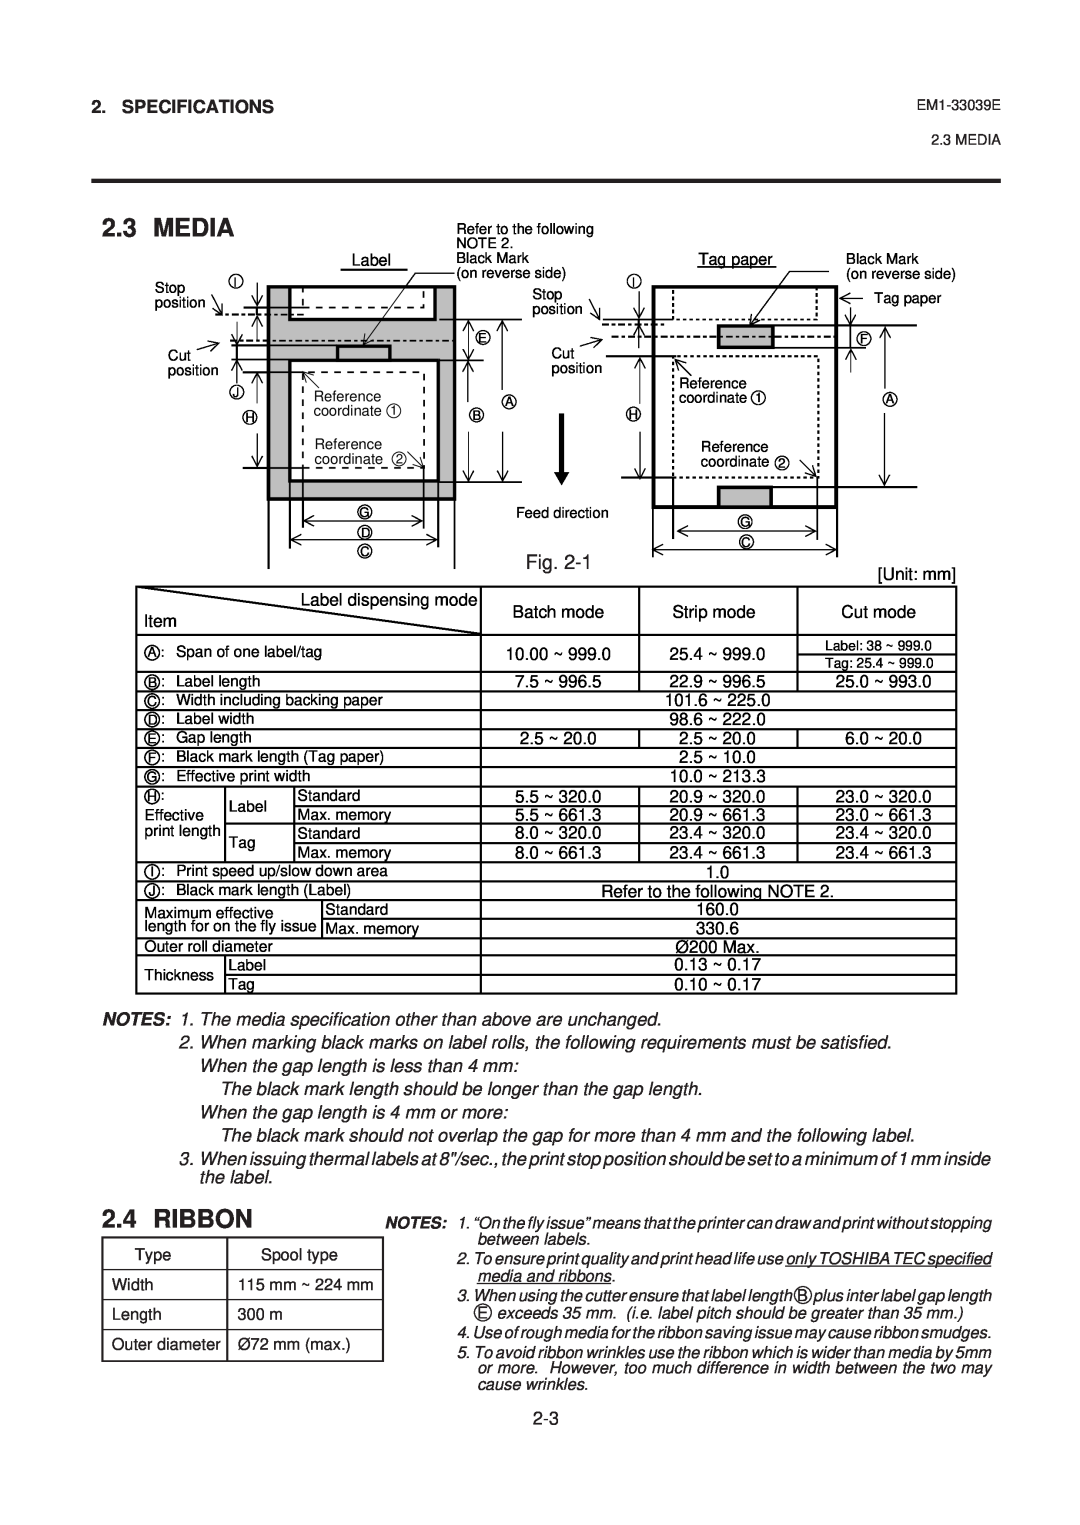 Toshiba EM1-33039EE, B-870 SERIES owner manual Media, Ribbon, Specifications 